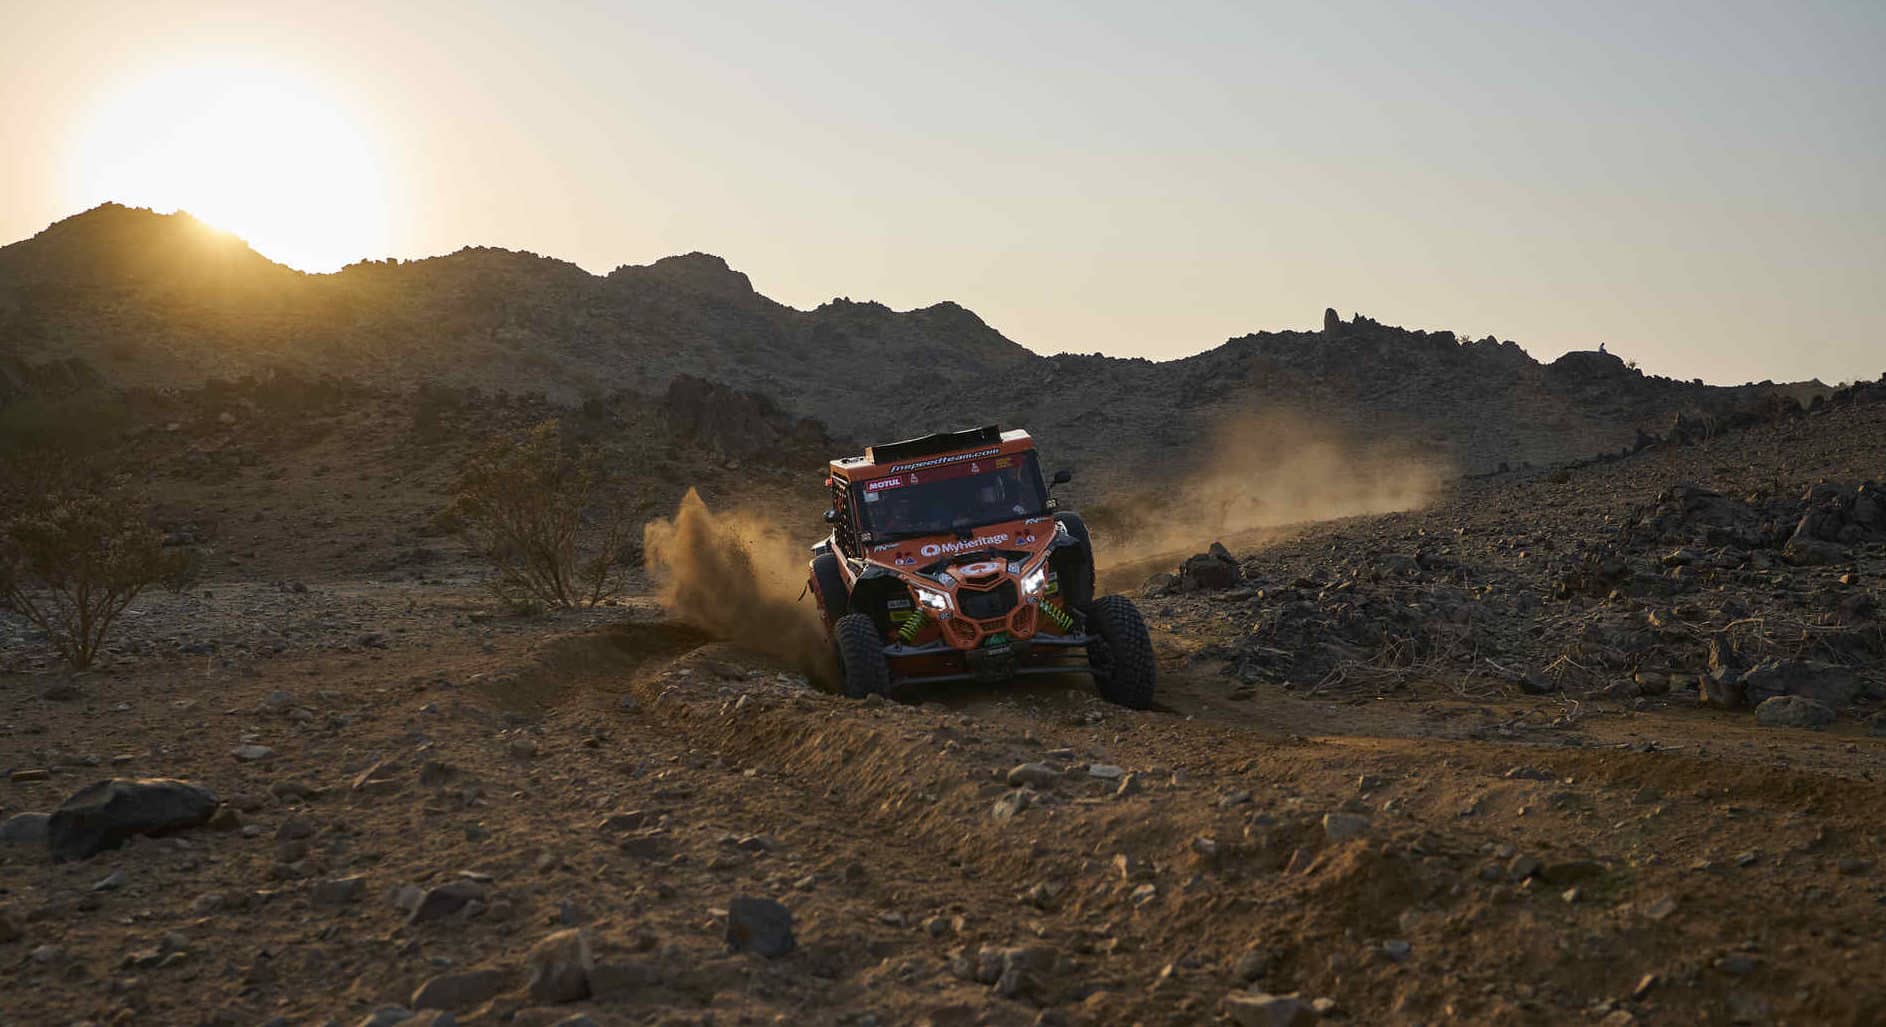 Trailblazing in the Arabian Desert: MyHeritage Sponsors Team Competing in 2021 Dakar Rally